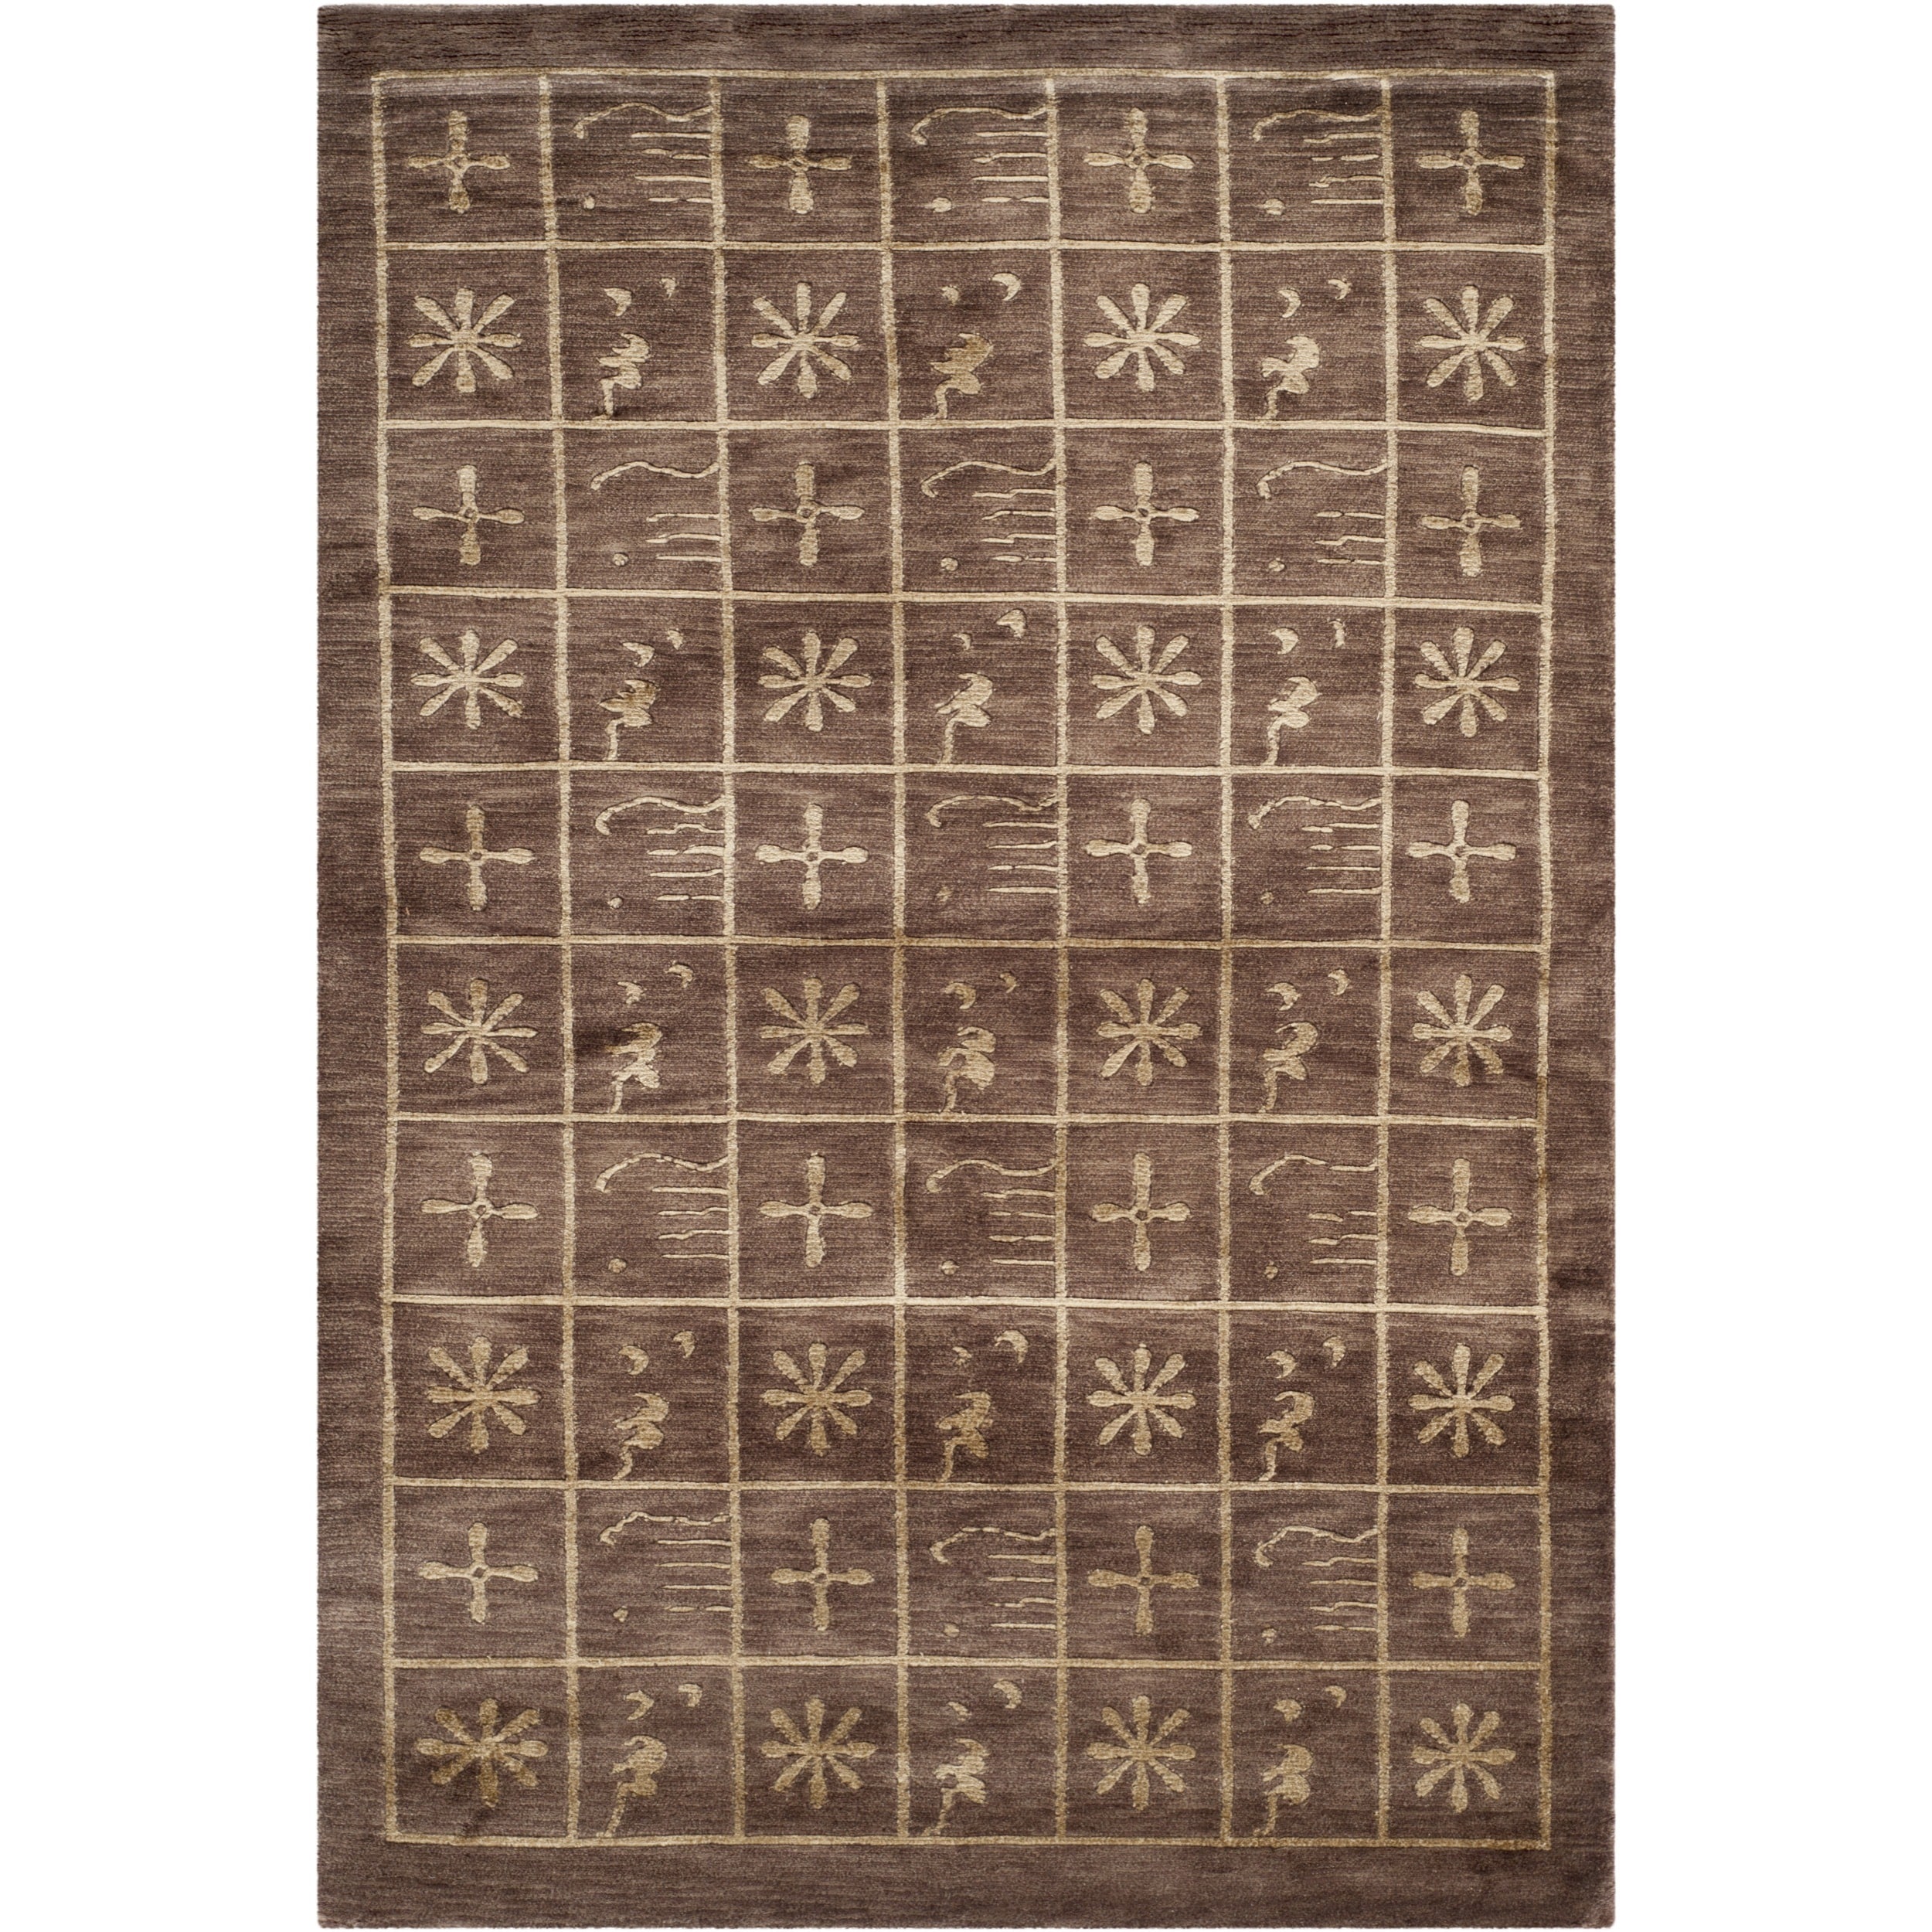 Safavieh Hand knotted Tibetan Multicolored Wool/ Silk Area Rug (4 X 6)